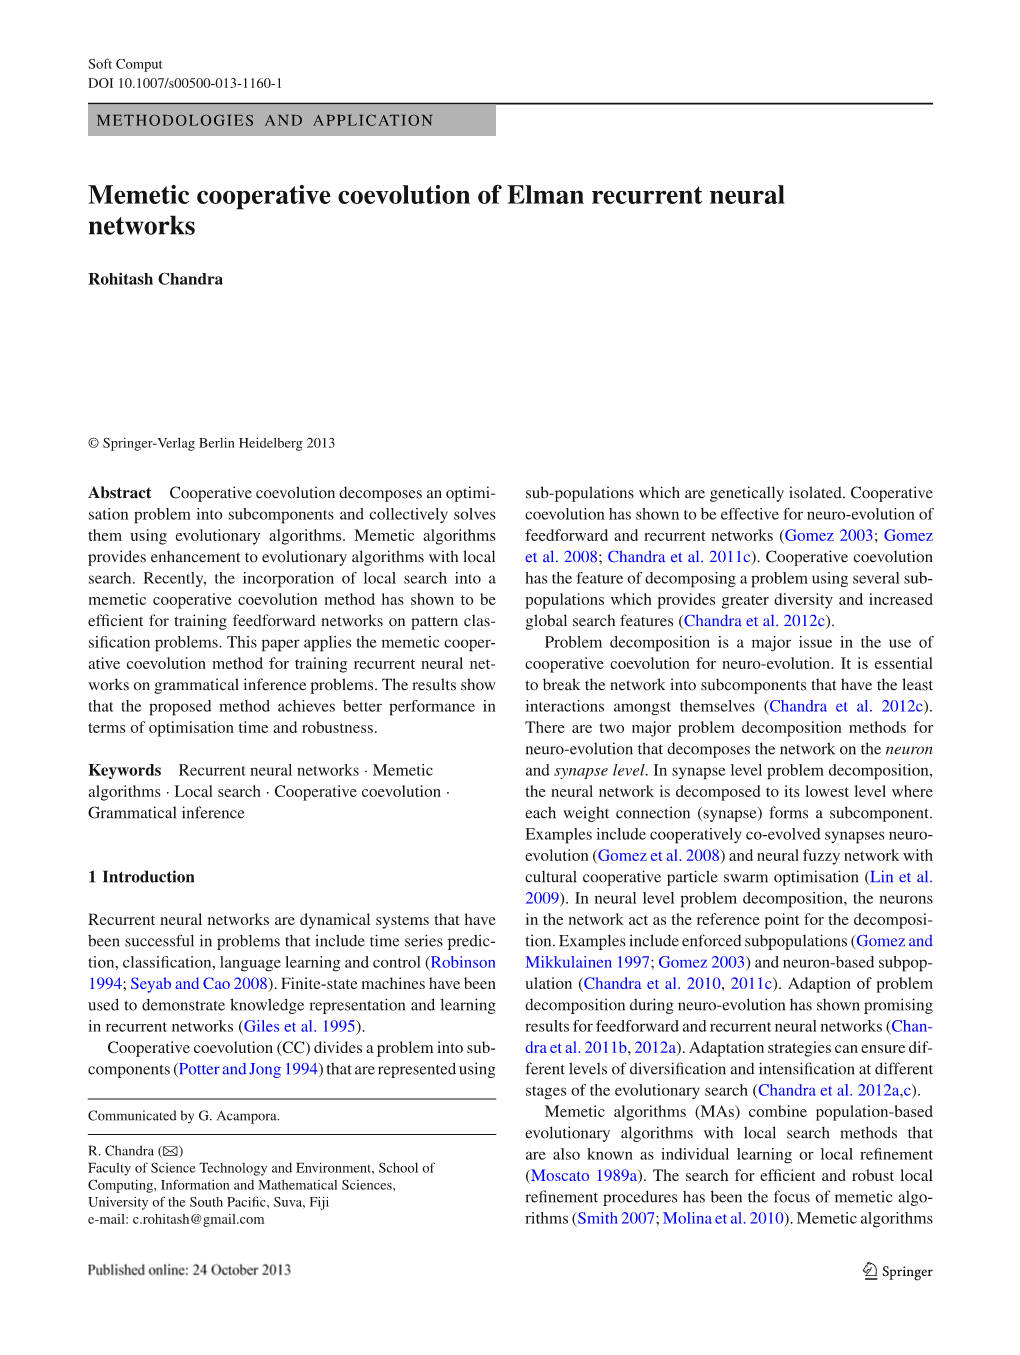 Memetic Cooperative Coevolution of Elman Recurrent Neural Networks